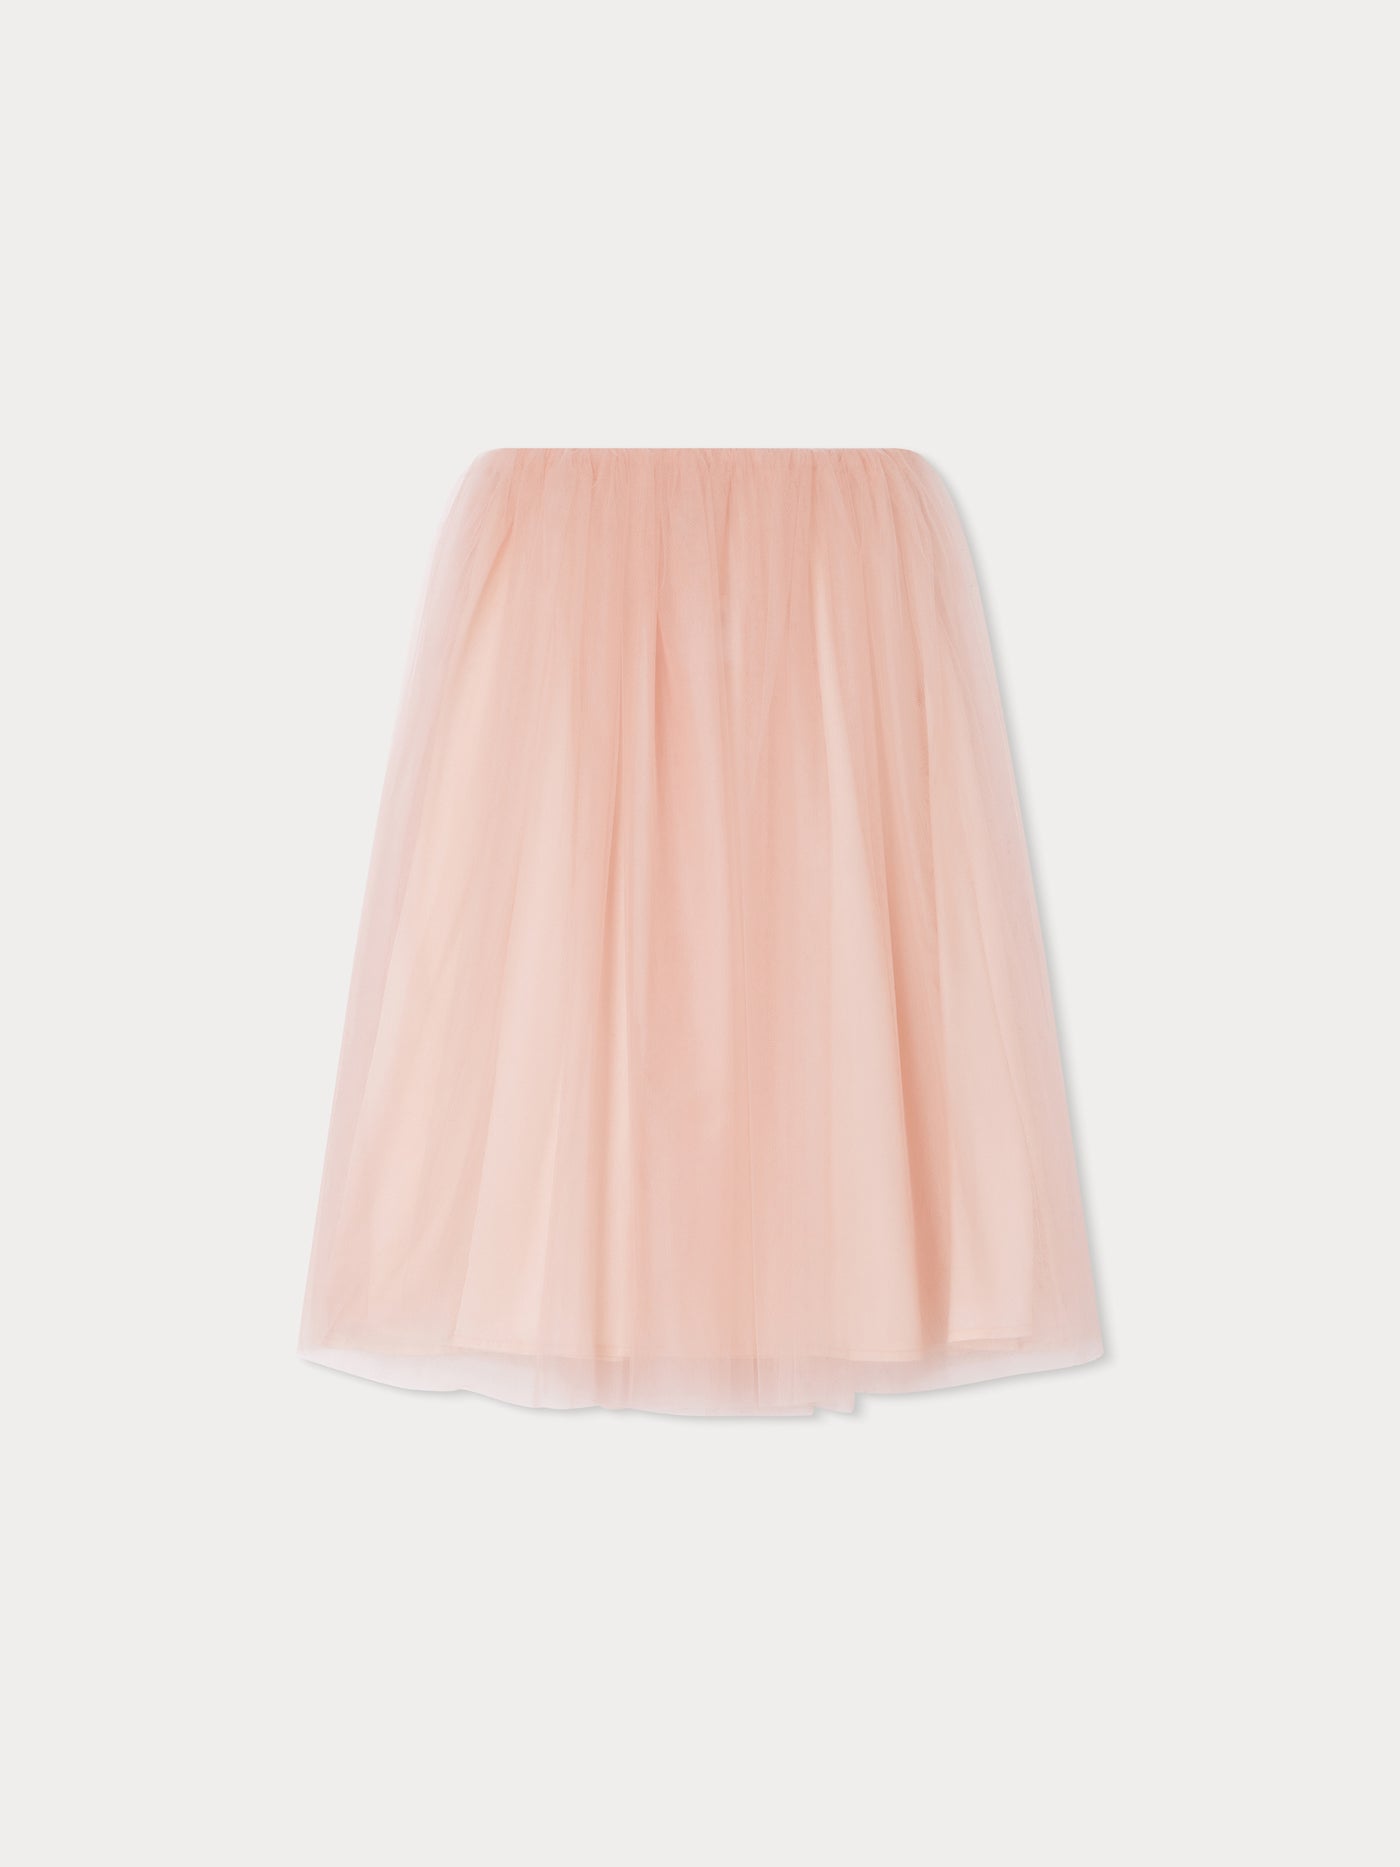 Panice Skirt pink blush